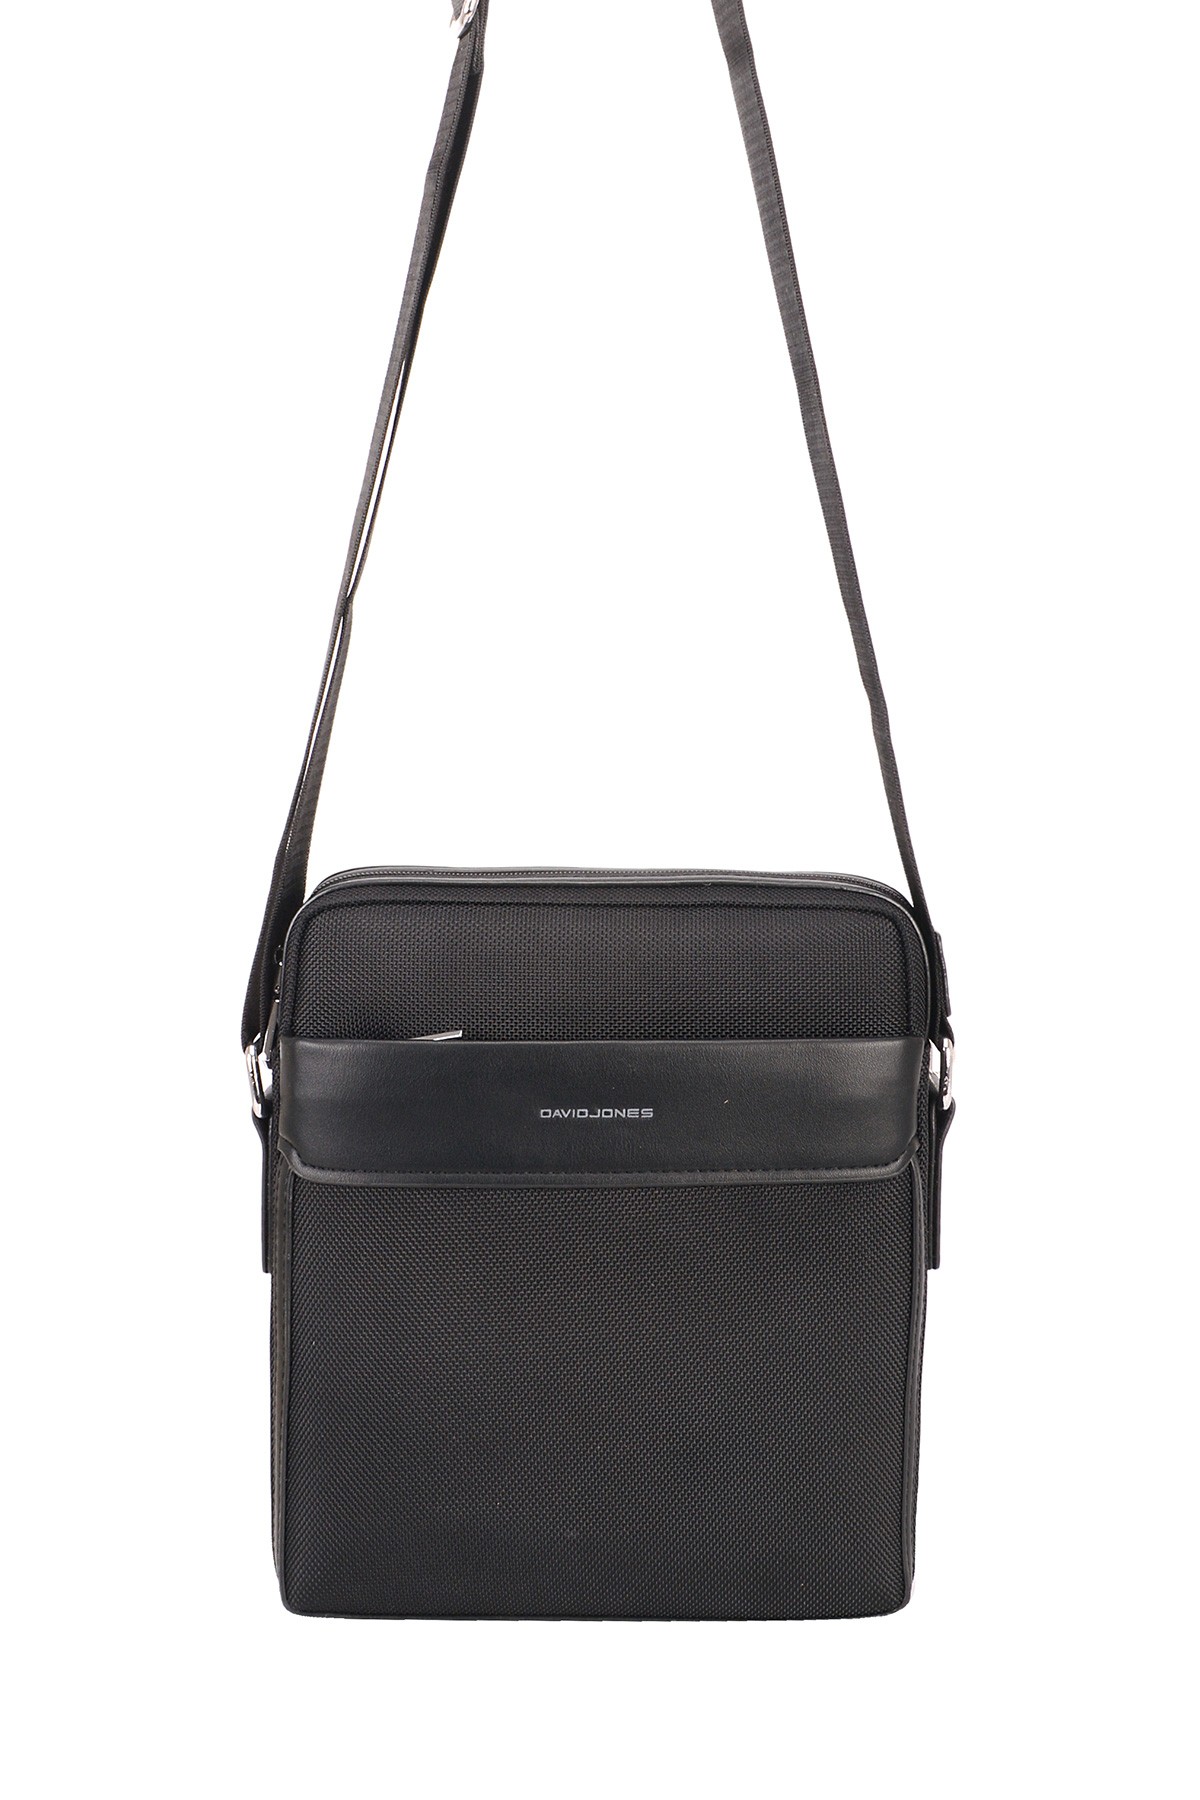 David Jones Paris Women's Handbag Satchel Purse Black | eBay